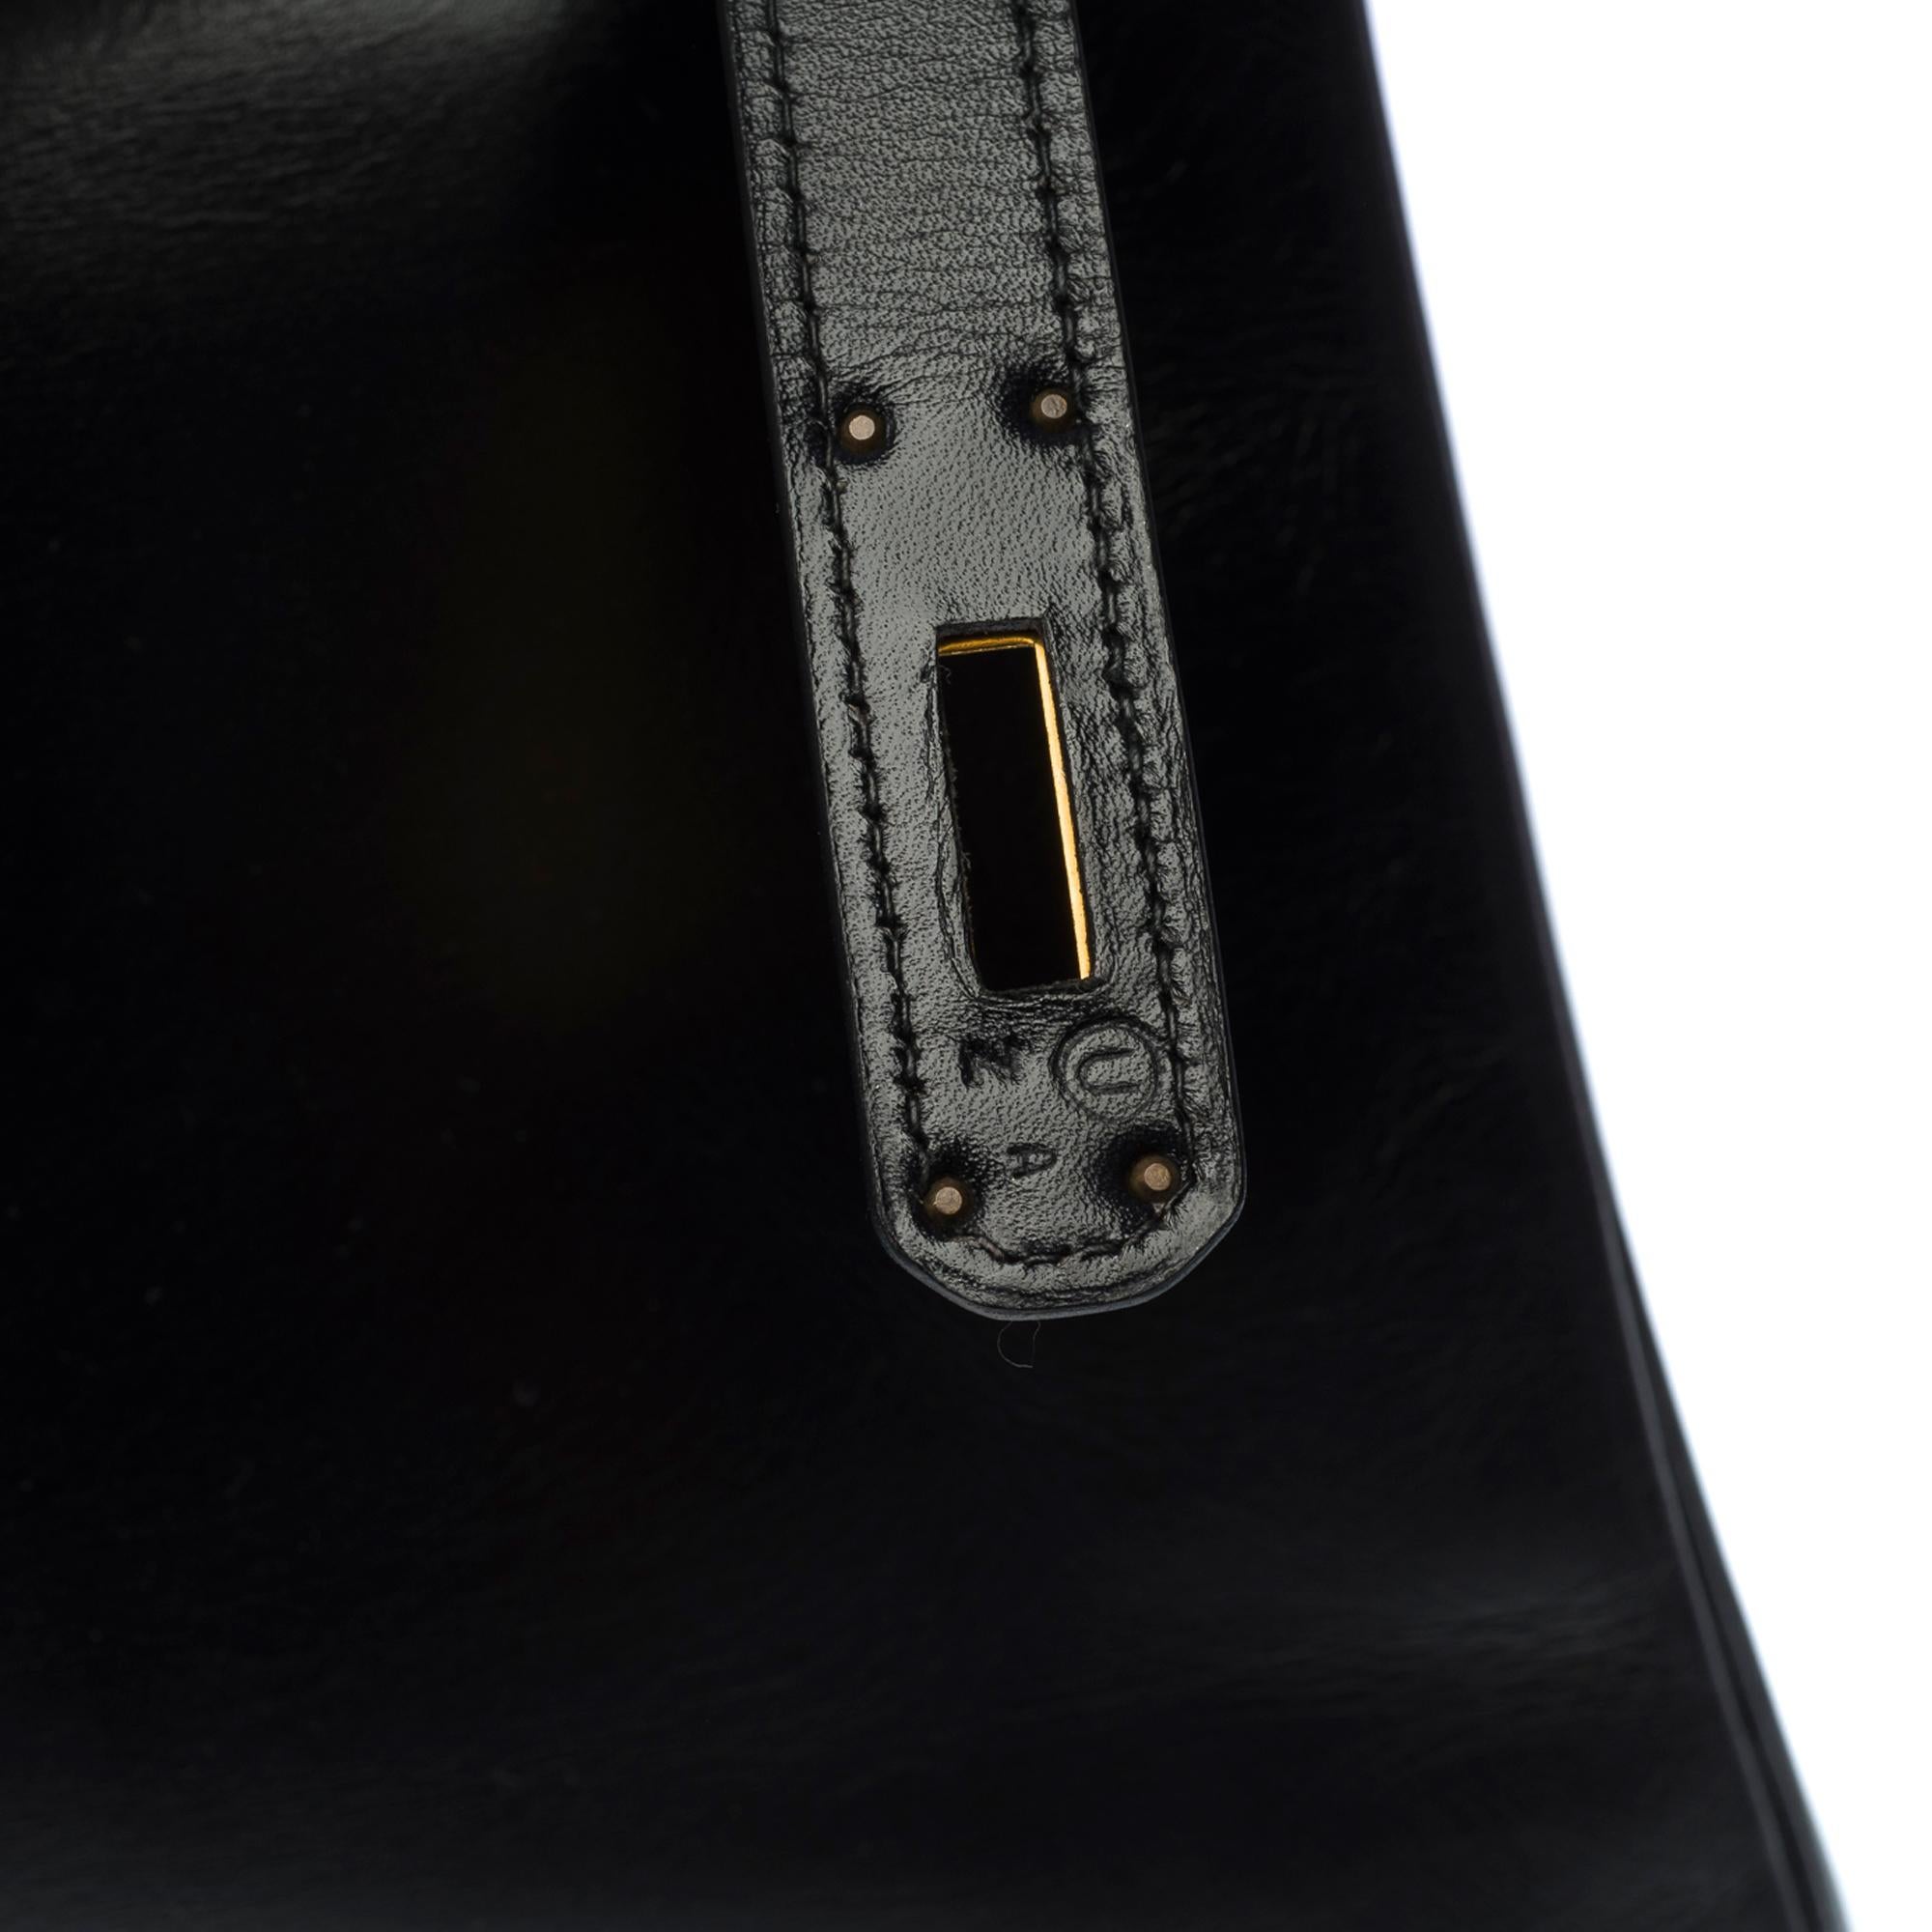 Gorgeous Hermès Kelly 35 retourne handbag strap in black calfskin leather, GHW 1